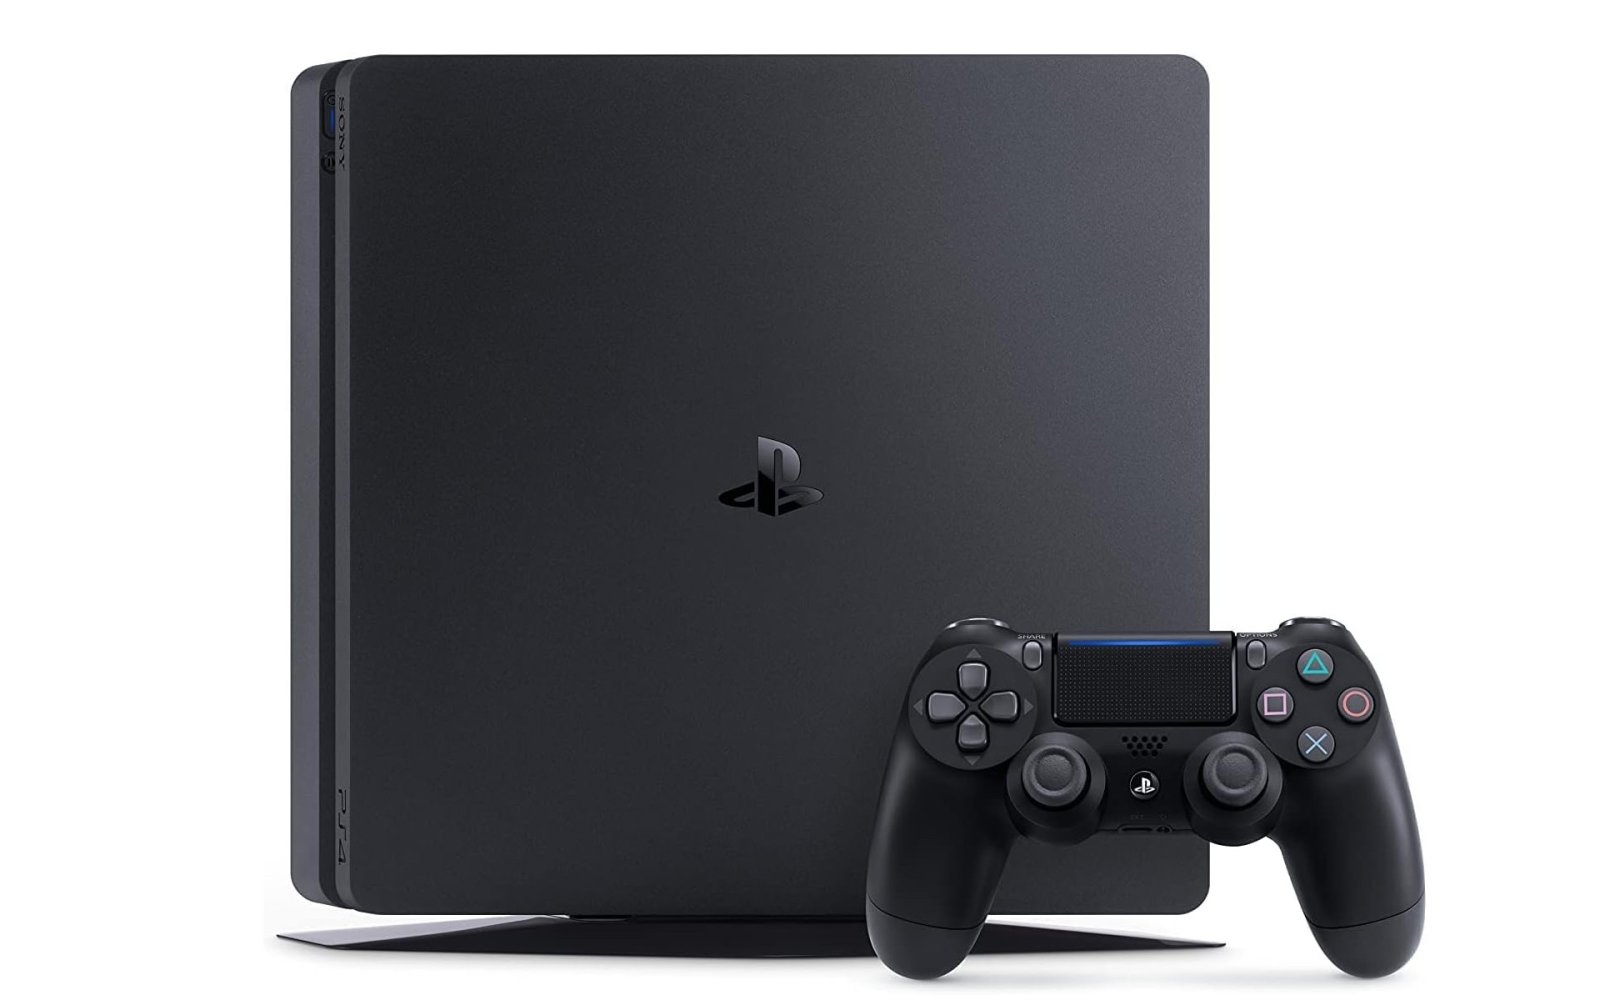 RPCSX โปรแกรมจำลอง PlayStation 4 สามารถรันเกมได้แล้วเป็นครั้งแรก